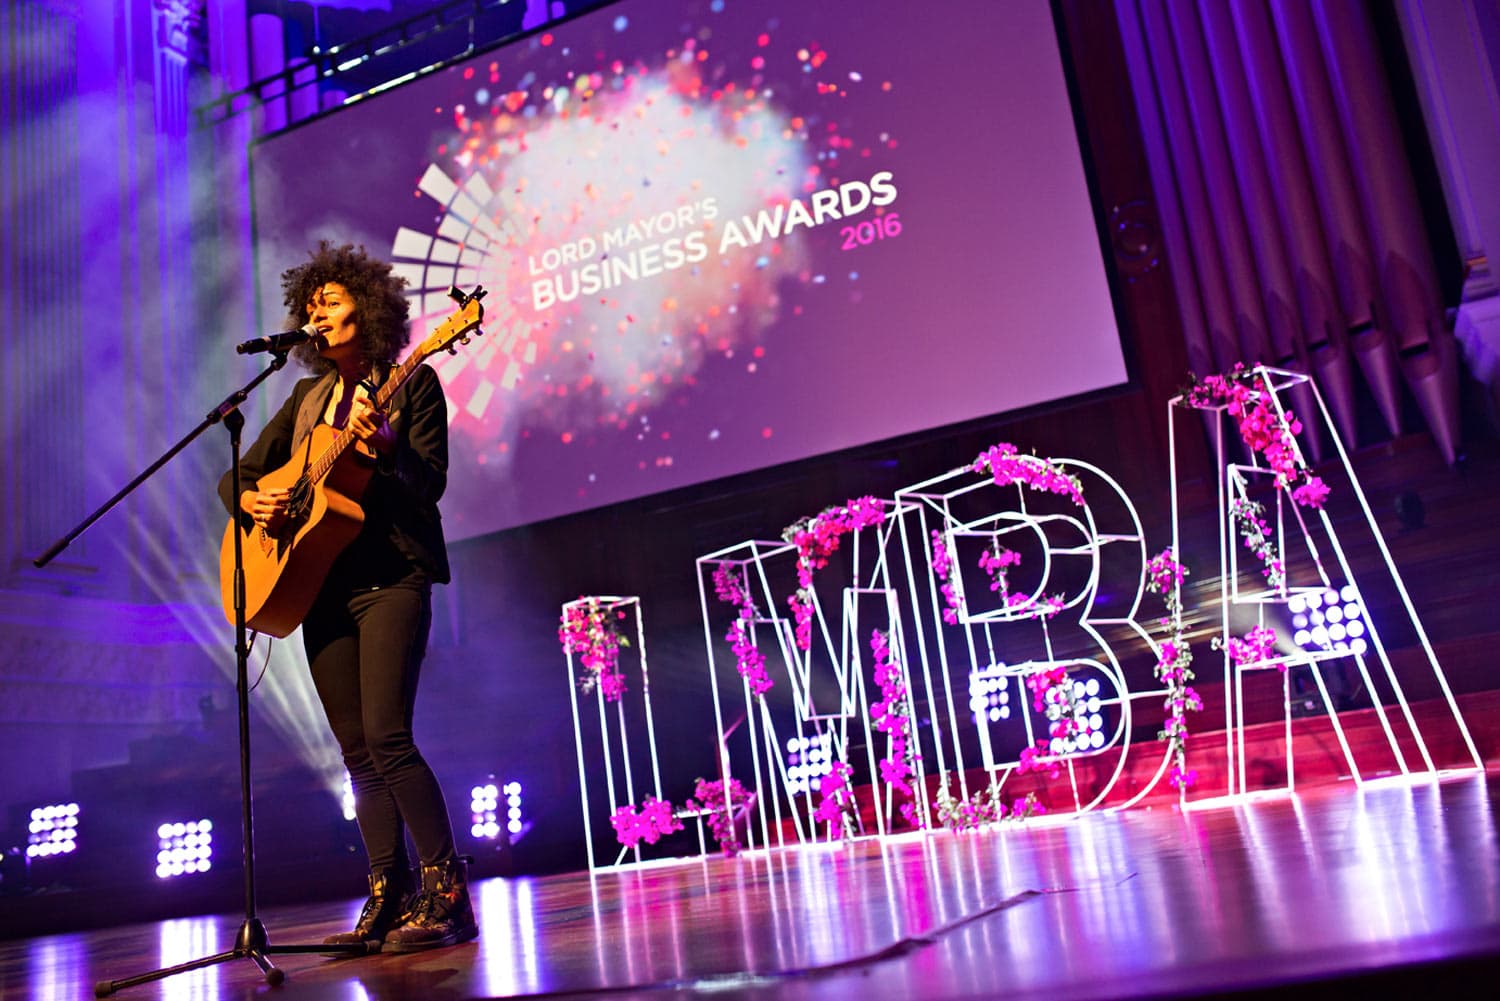 Brisbane lord Mayor's Business Awards 2016Event Photography Brisbane LMBA guitar entertainment